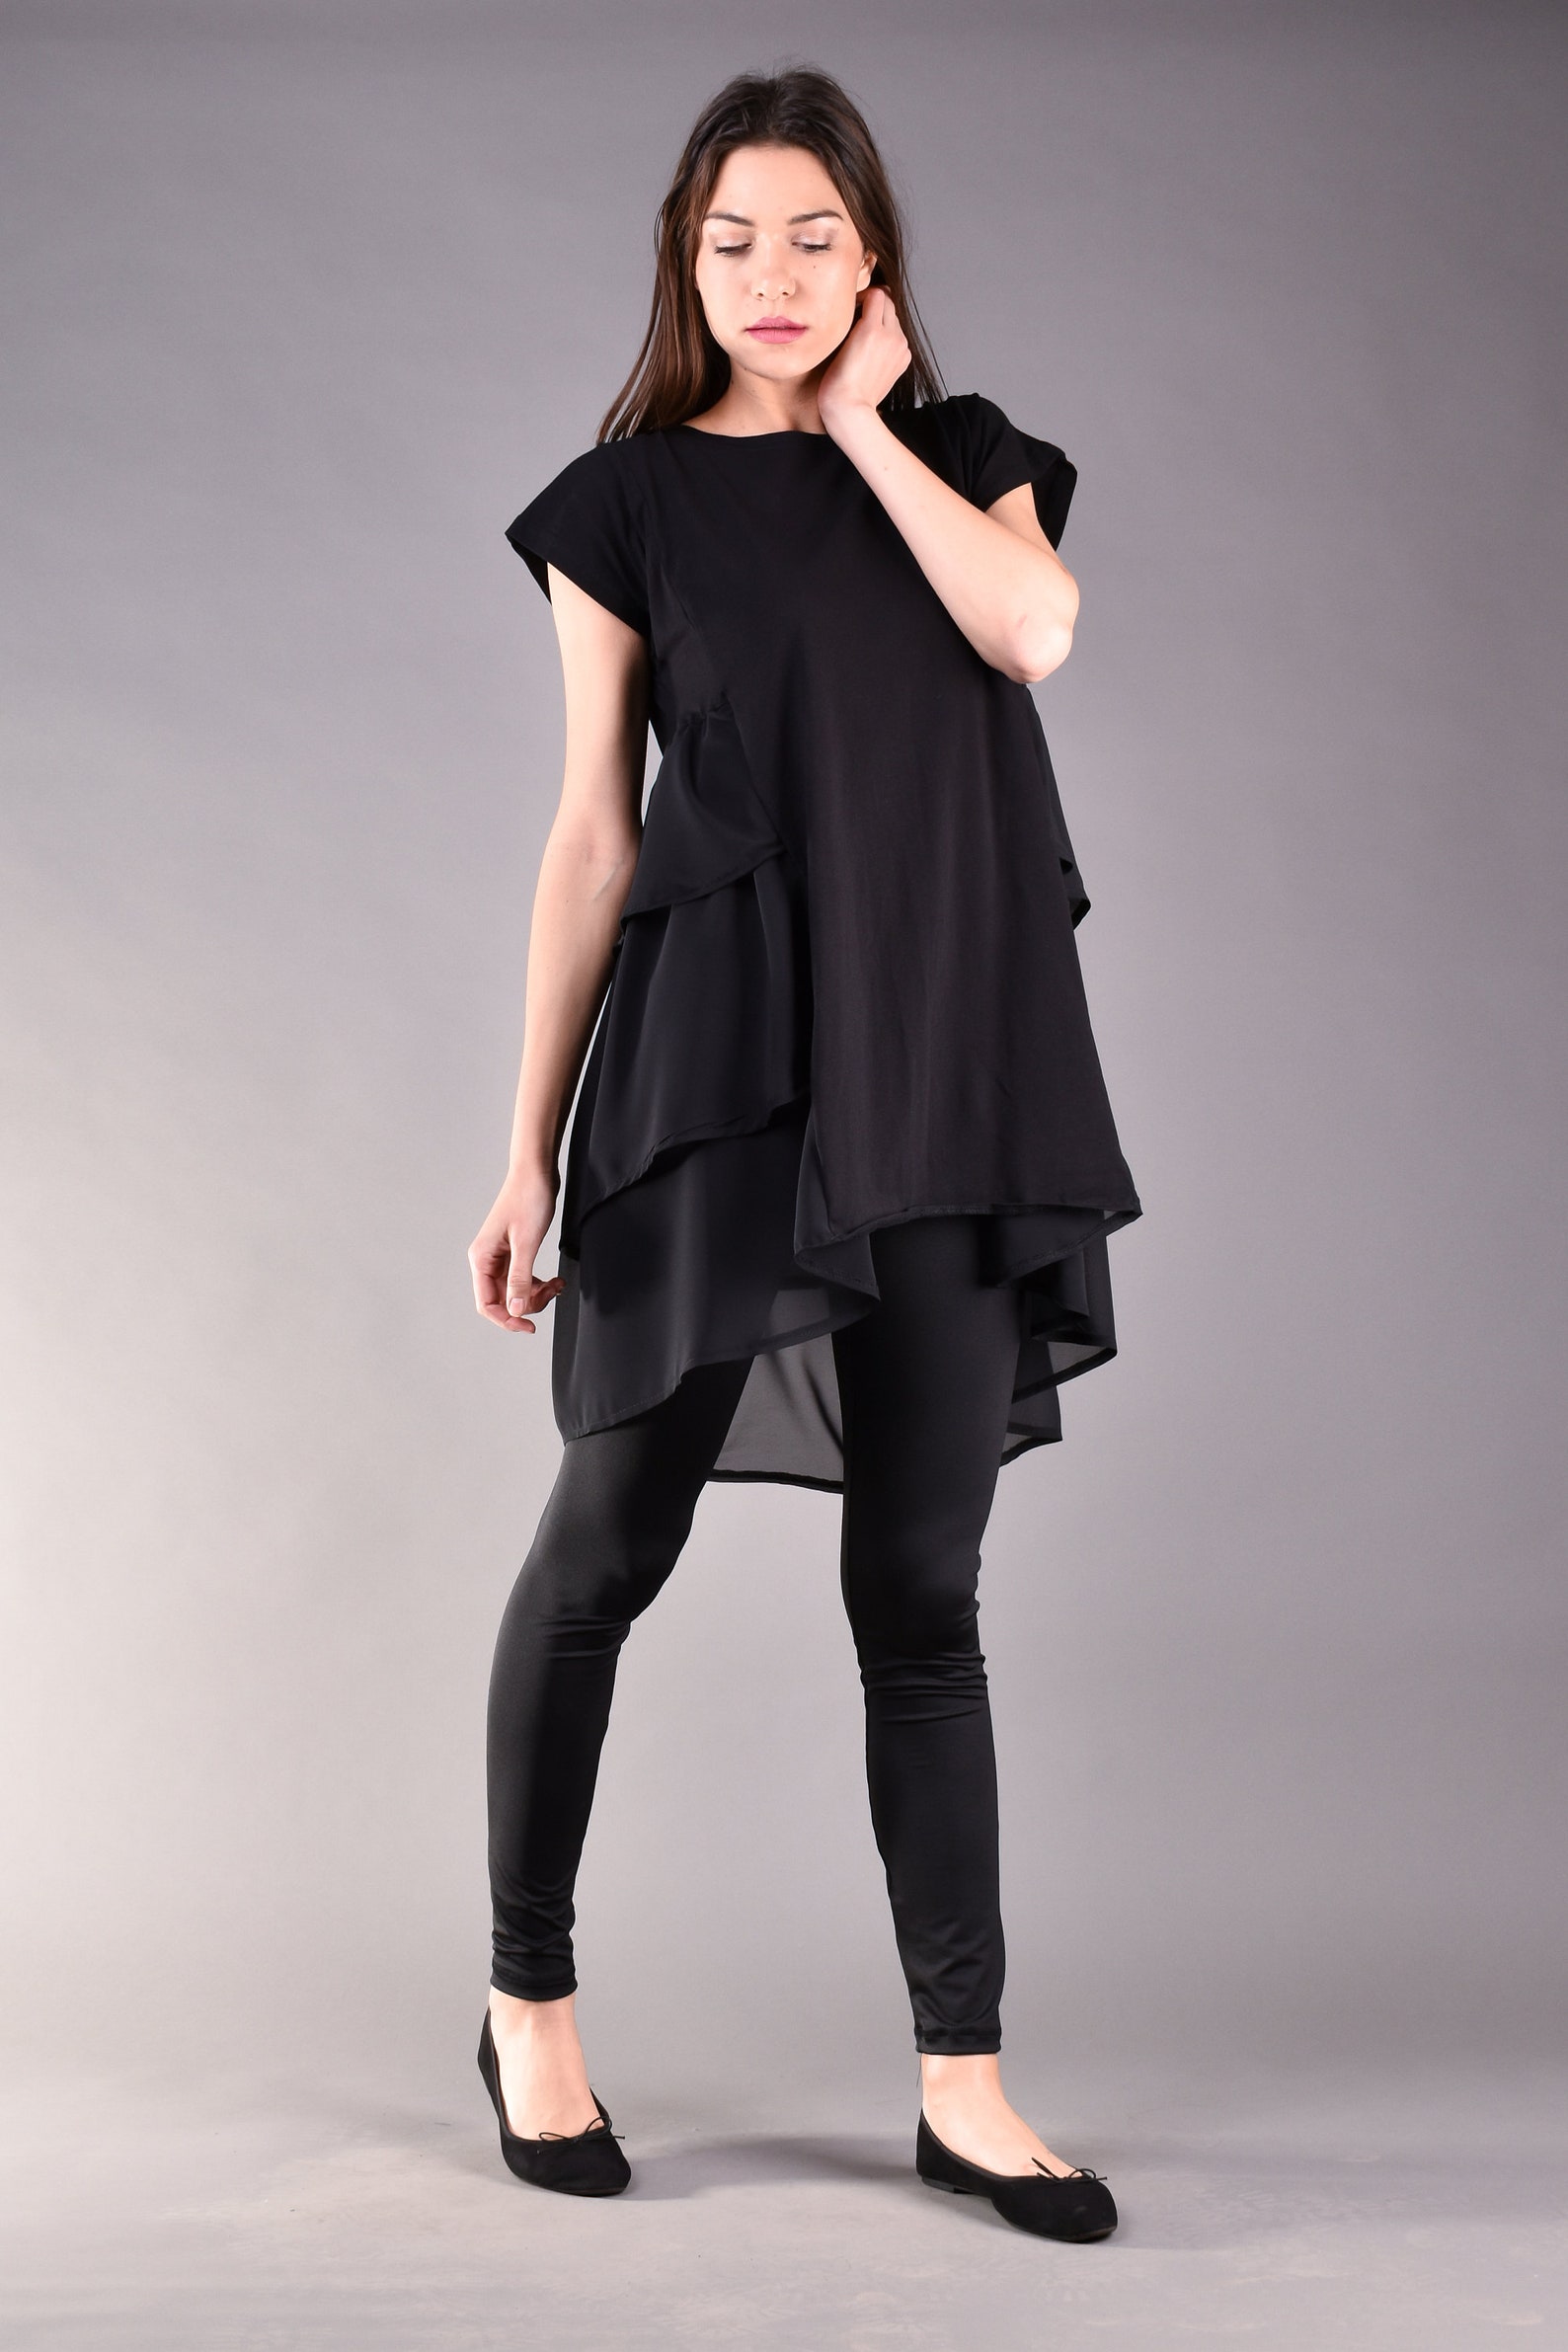 Black Tunic Top Plus Size Tunic Asymmetric Tunic Women | Etsy